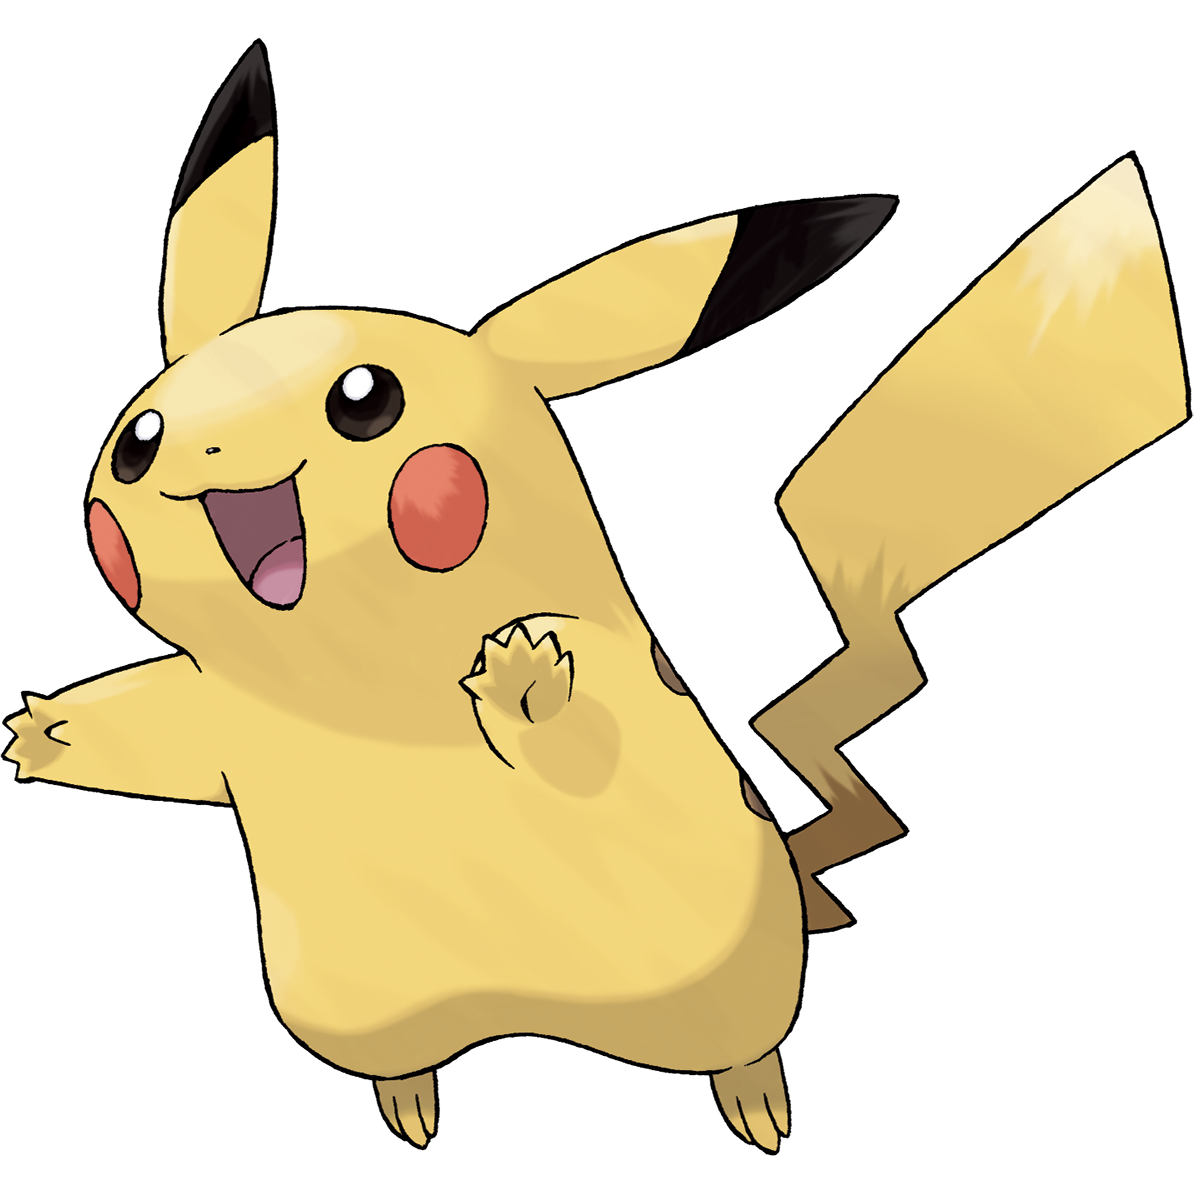 Pokémon FireRed and LeafGreen - Wikipedia